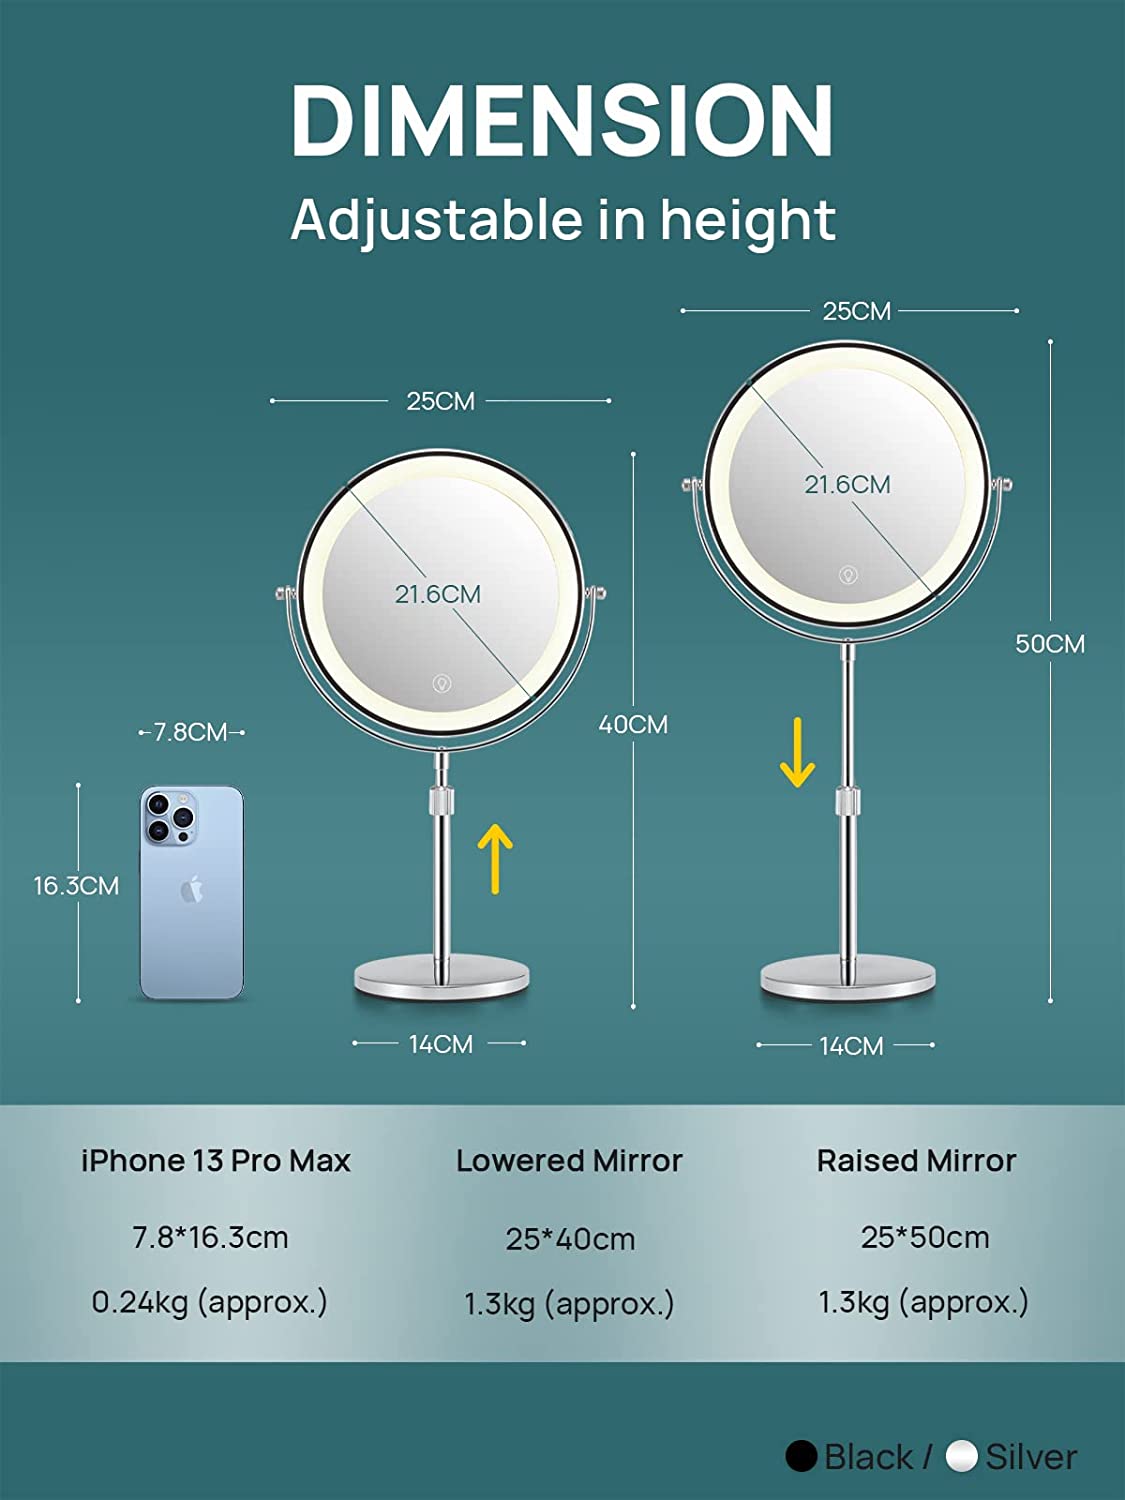 Omiro Tabletop LED Mirror